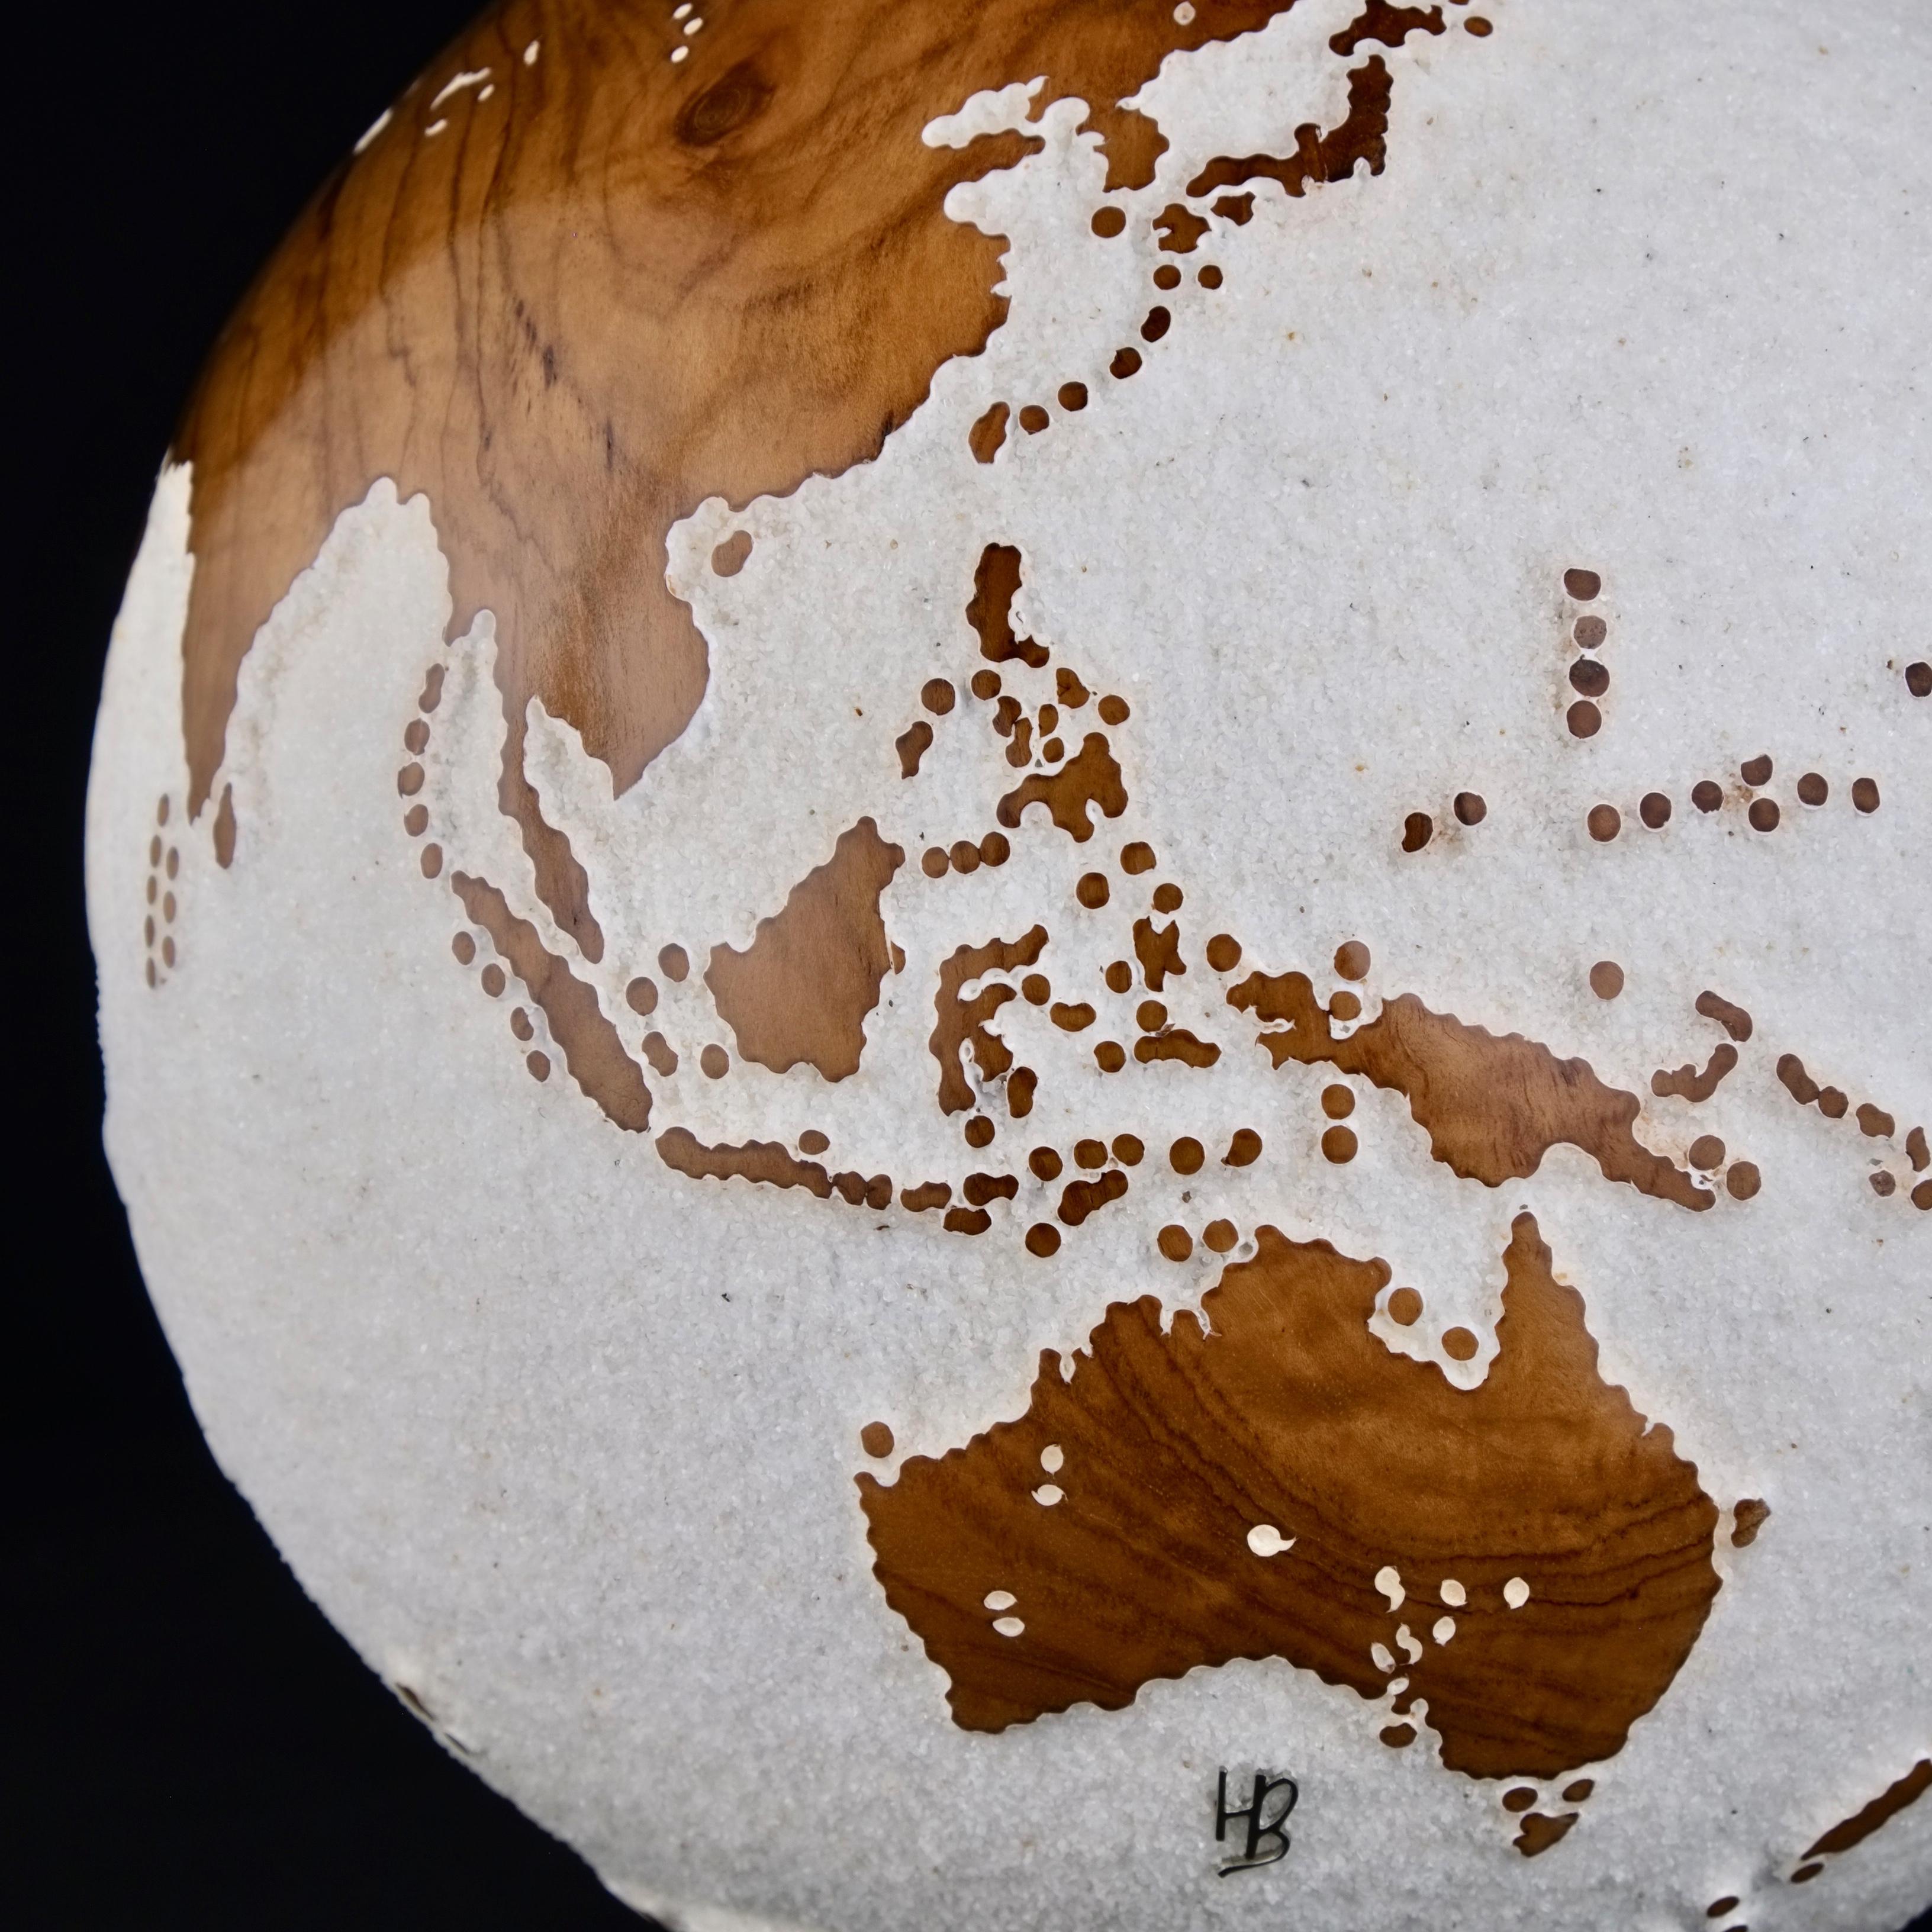 Globetrotter Teak Bruno Helgen Contemporary turning wood globe sculpture  For Sale 16